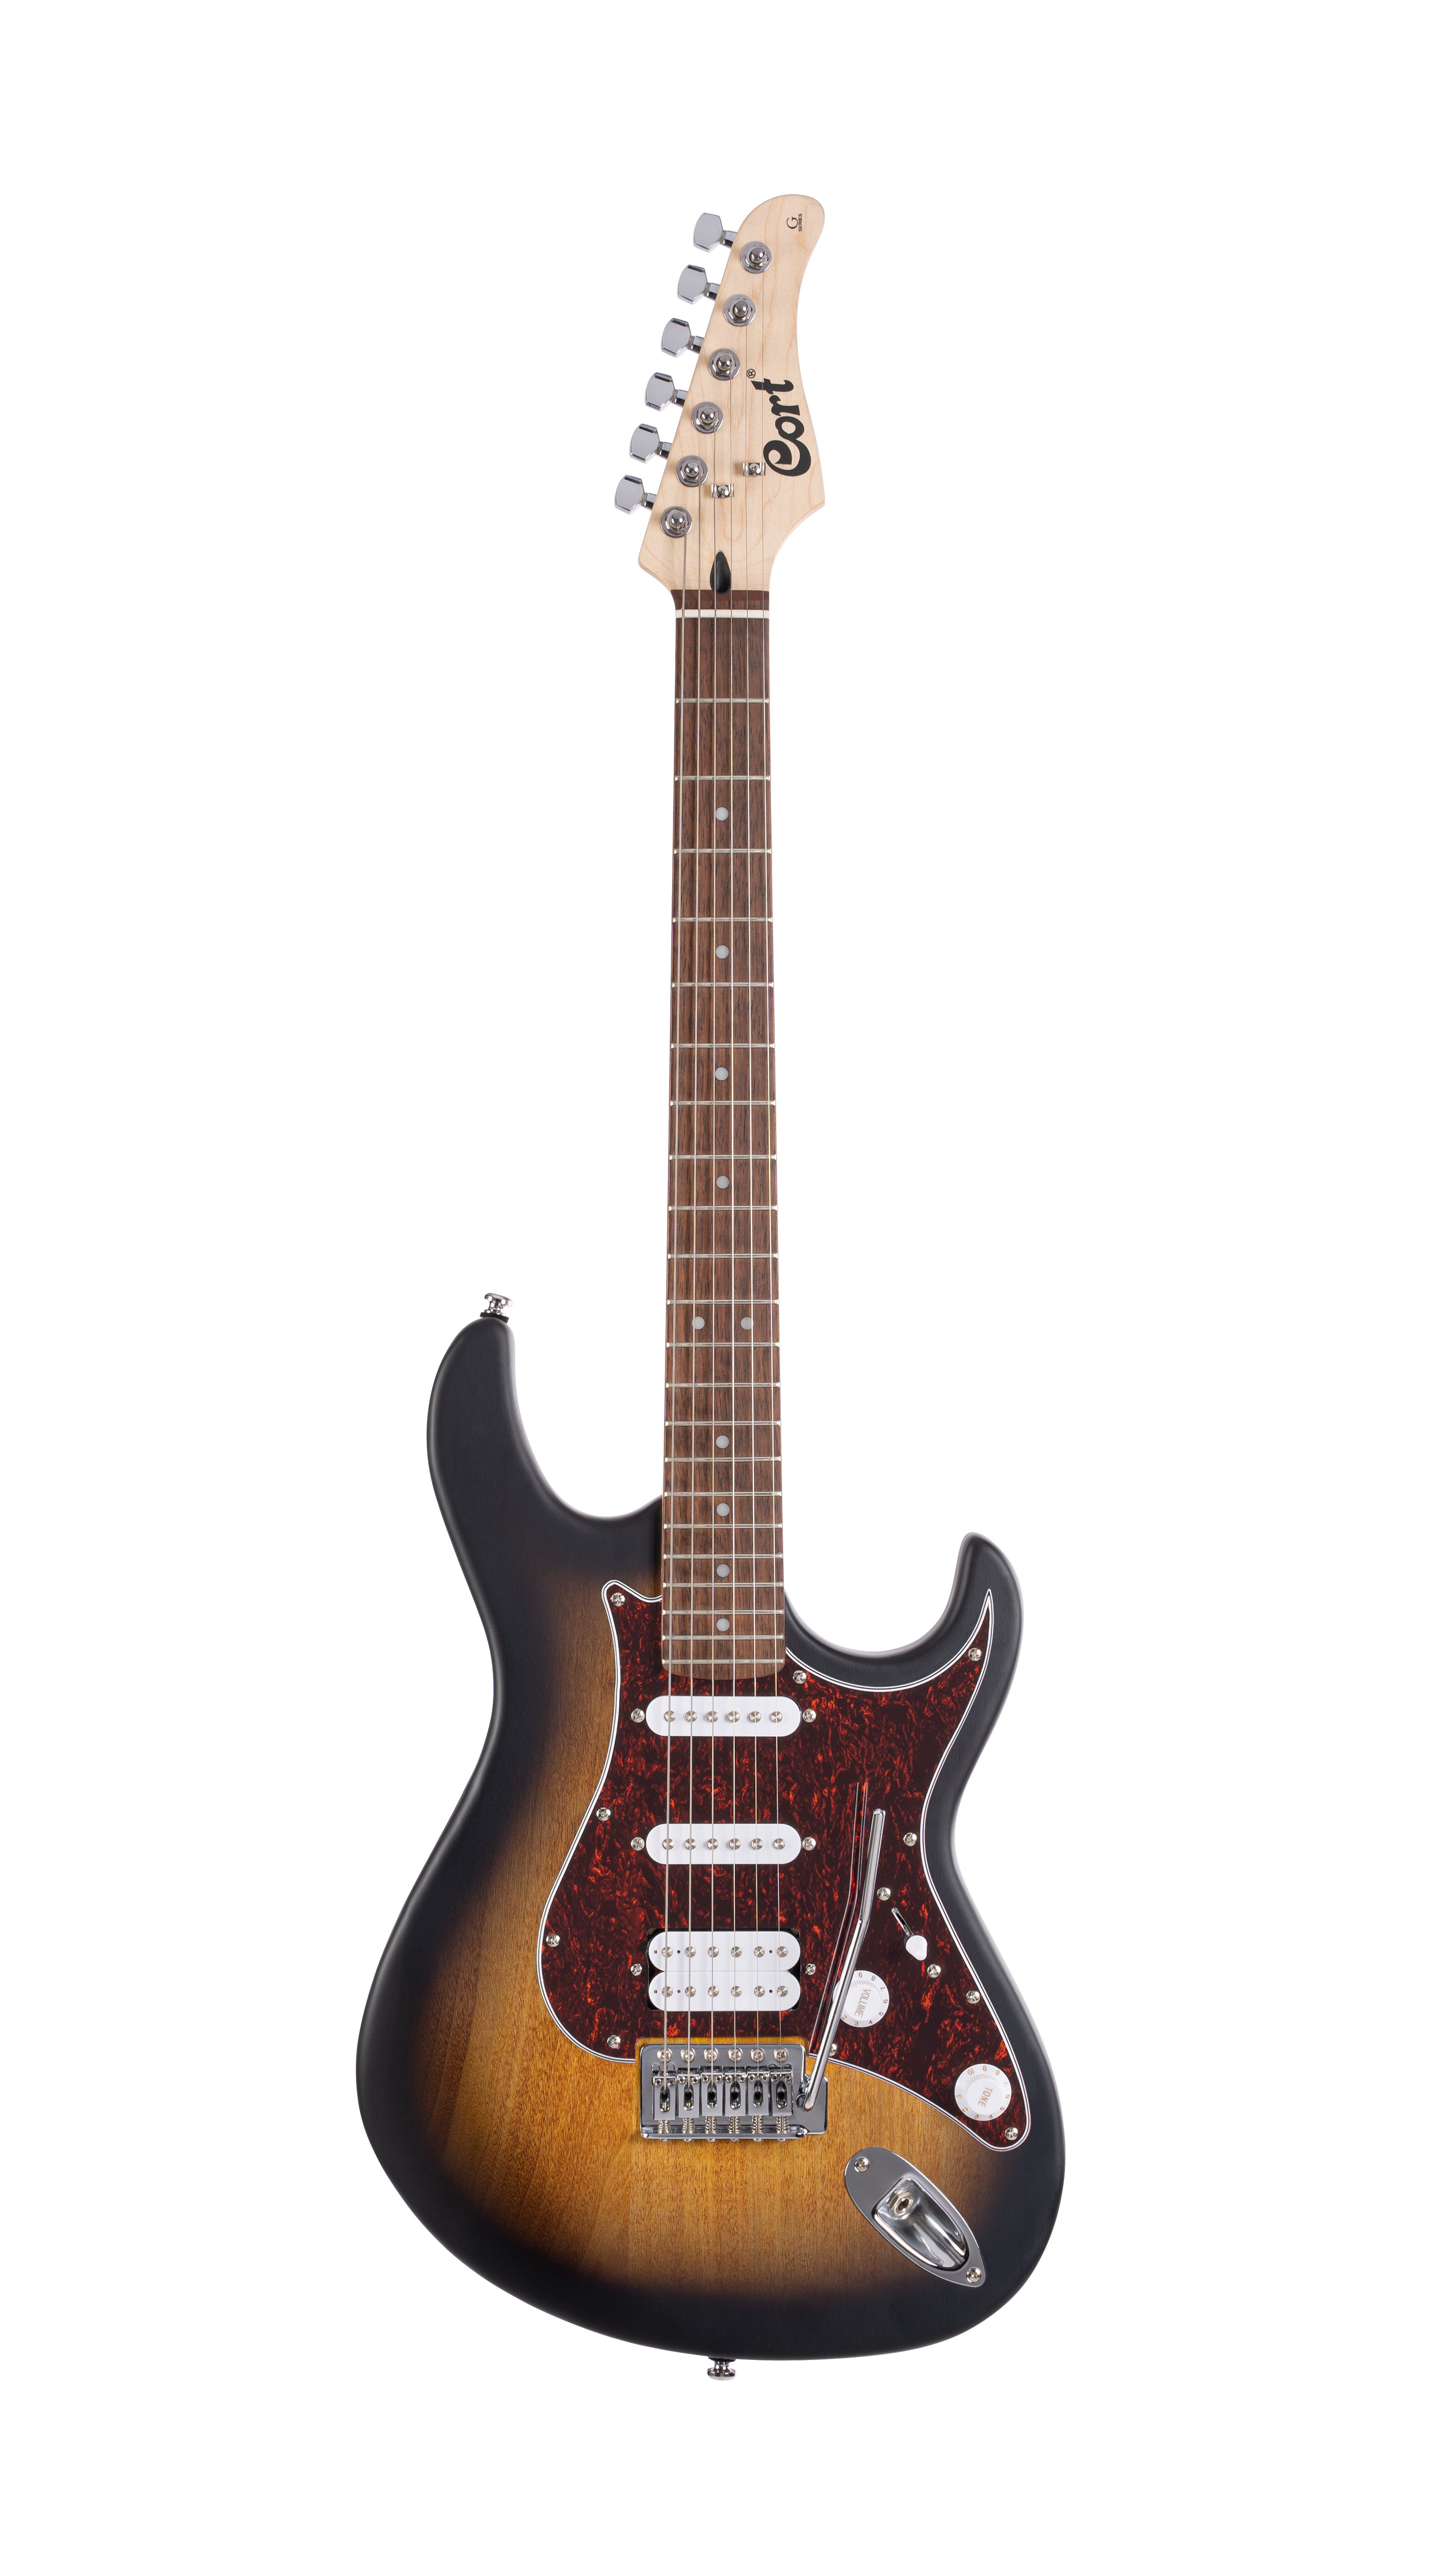 Cort G110 Open Pore Sunburst, Electric Guitar for sale at Richards Guitars.